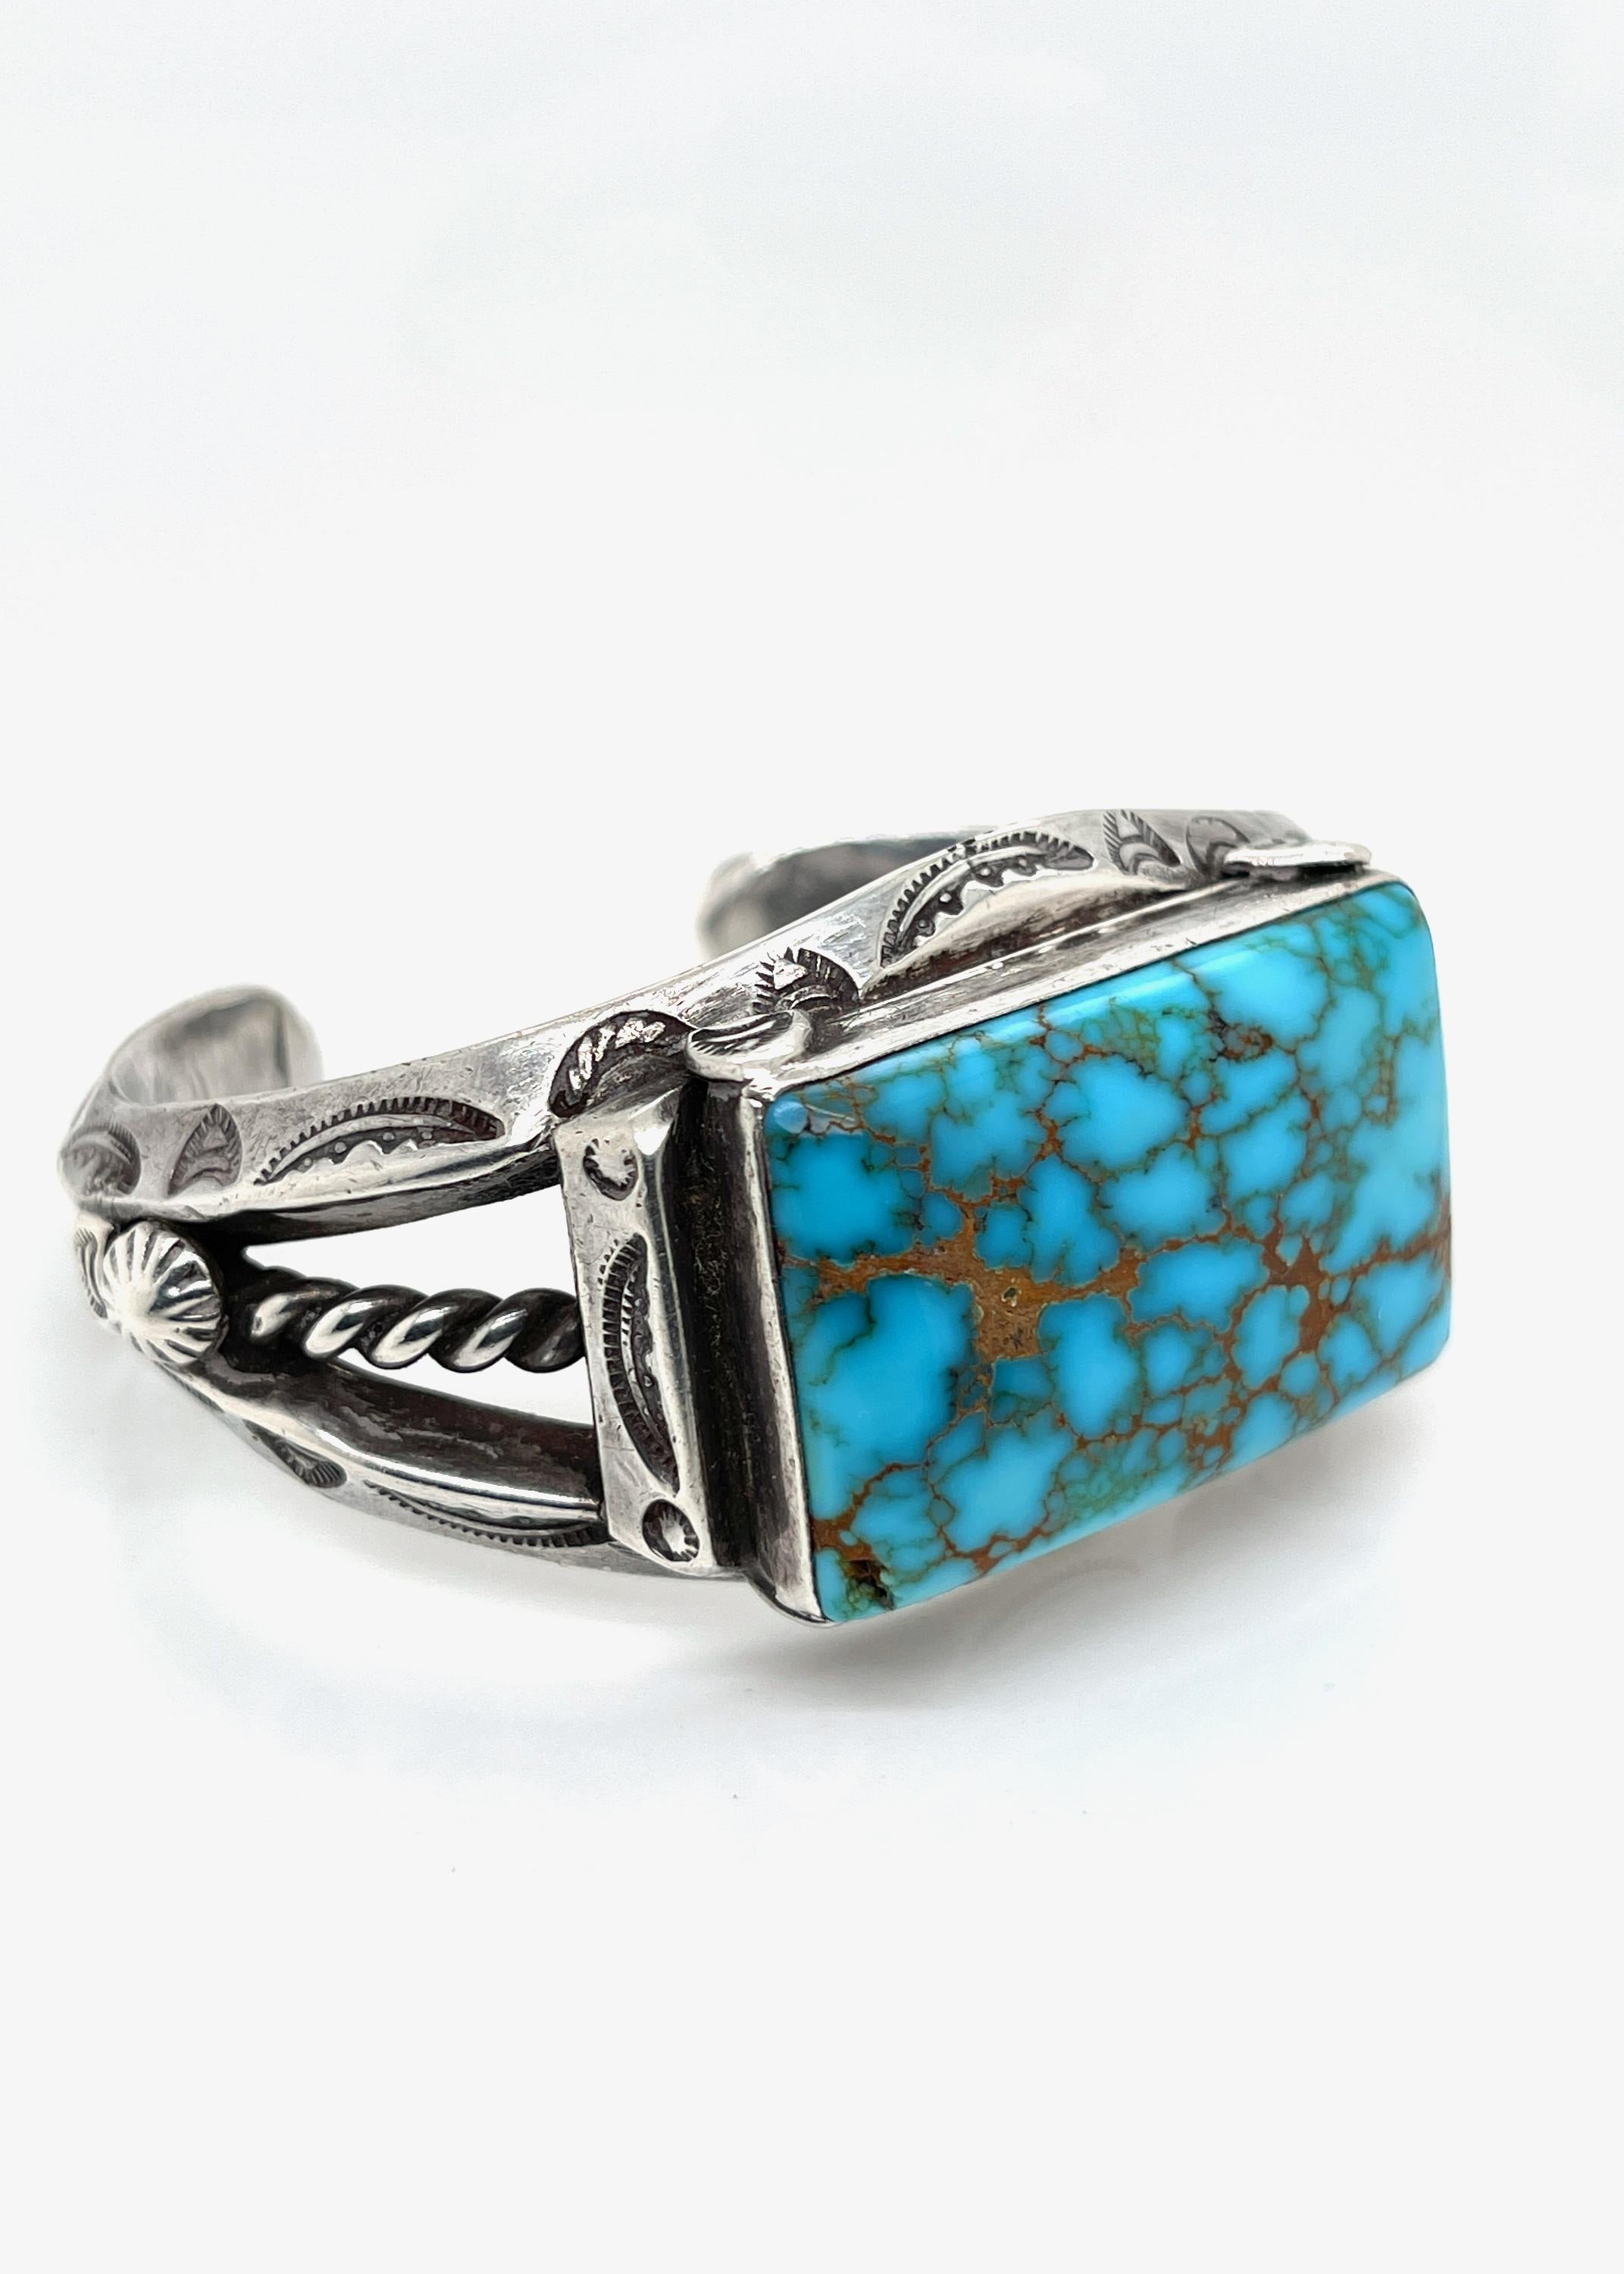 Cabochon Old Pawn Navajo Native American Silver & Matrix Turquoise Cuff Bracelet